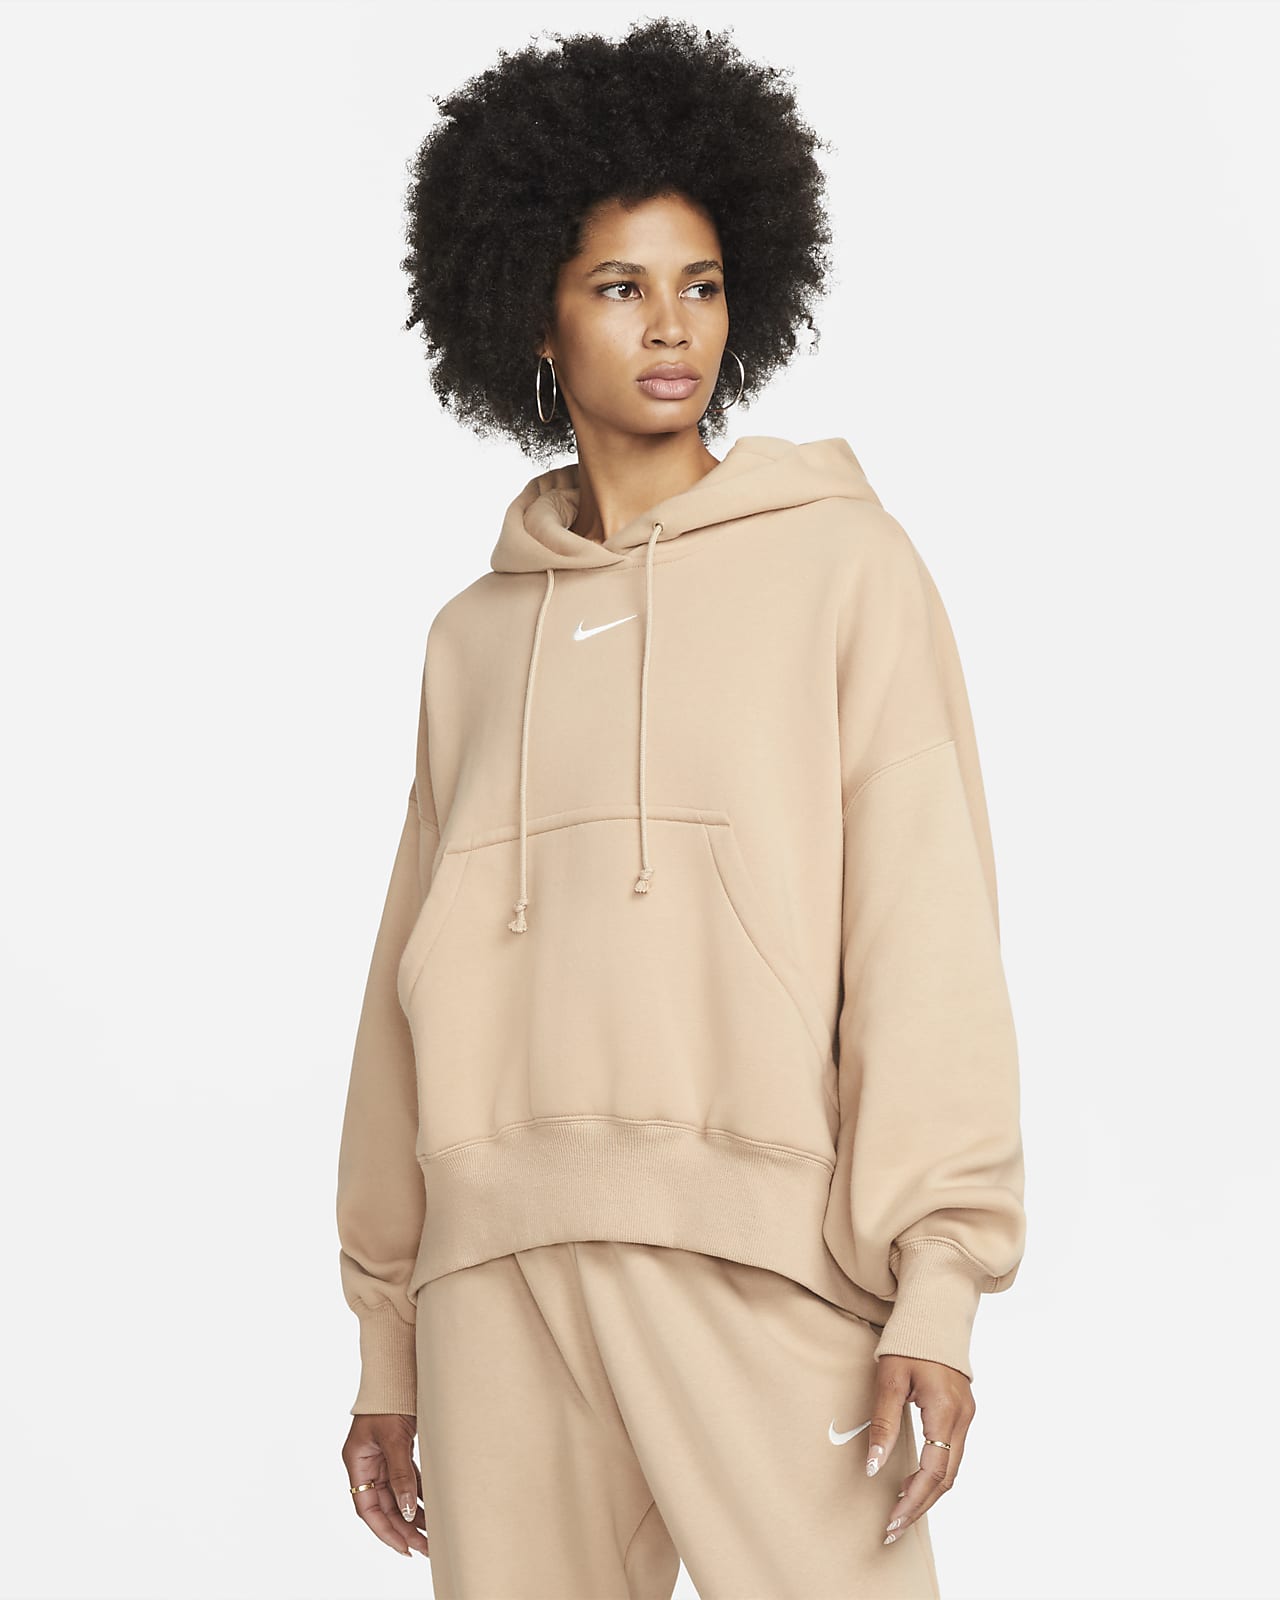 hoodie oversize femme nike